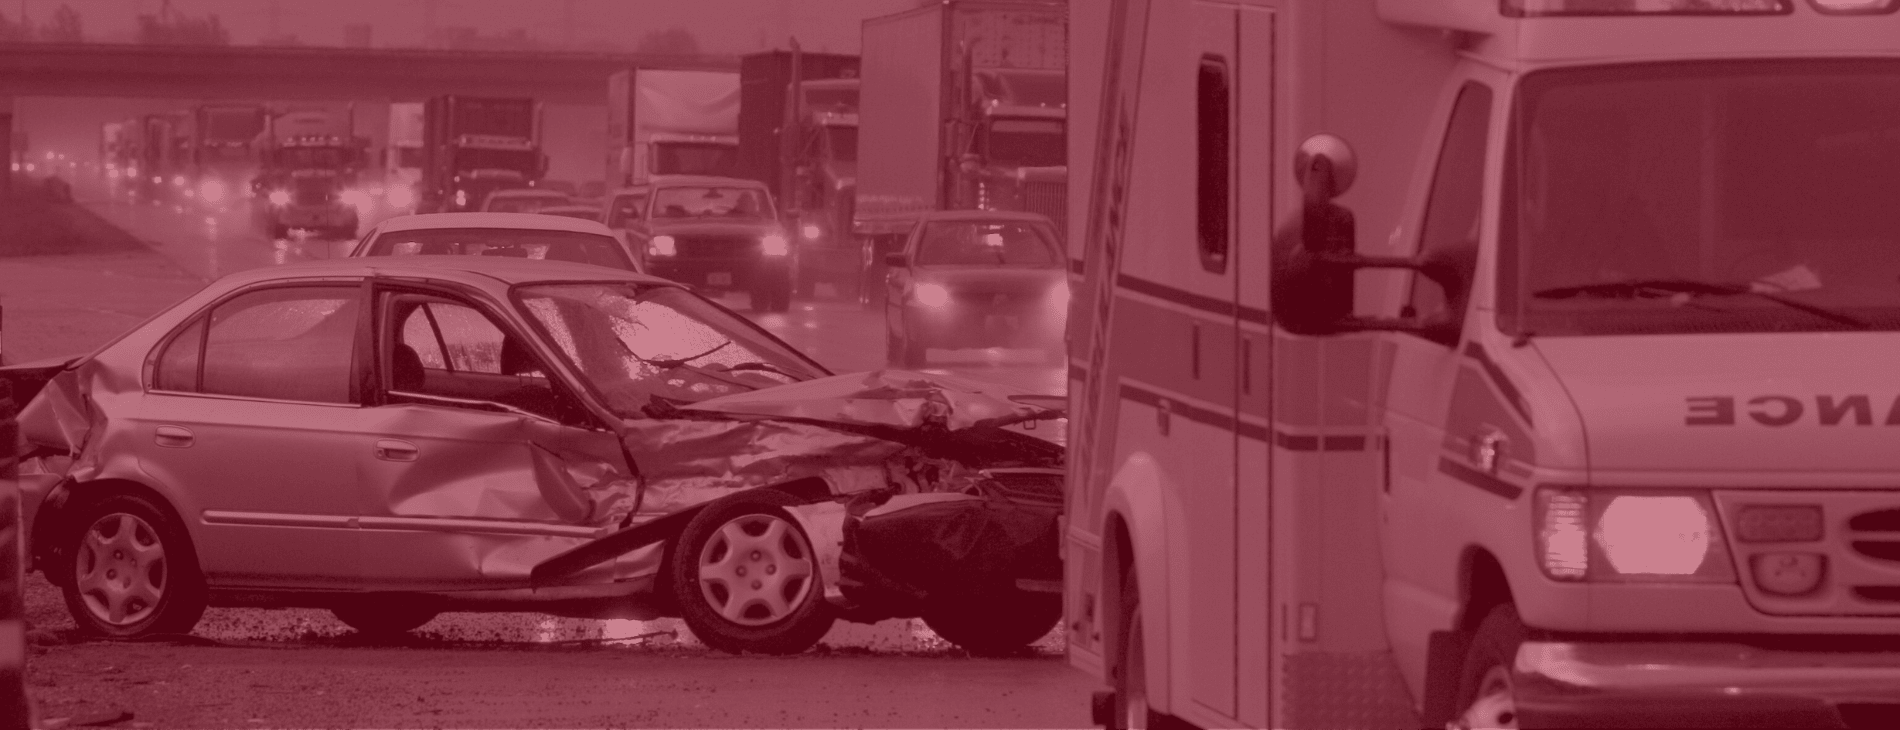 Oakland Park car crash